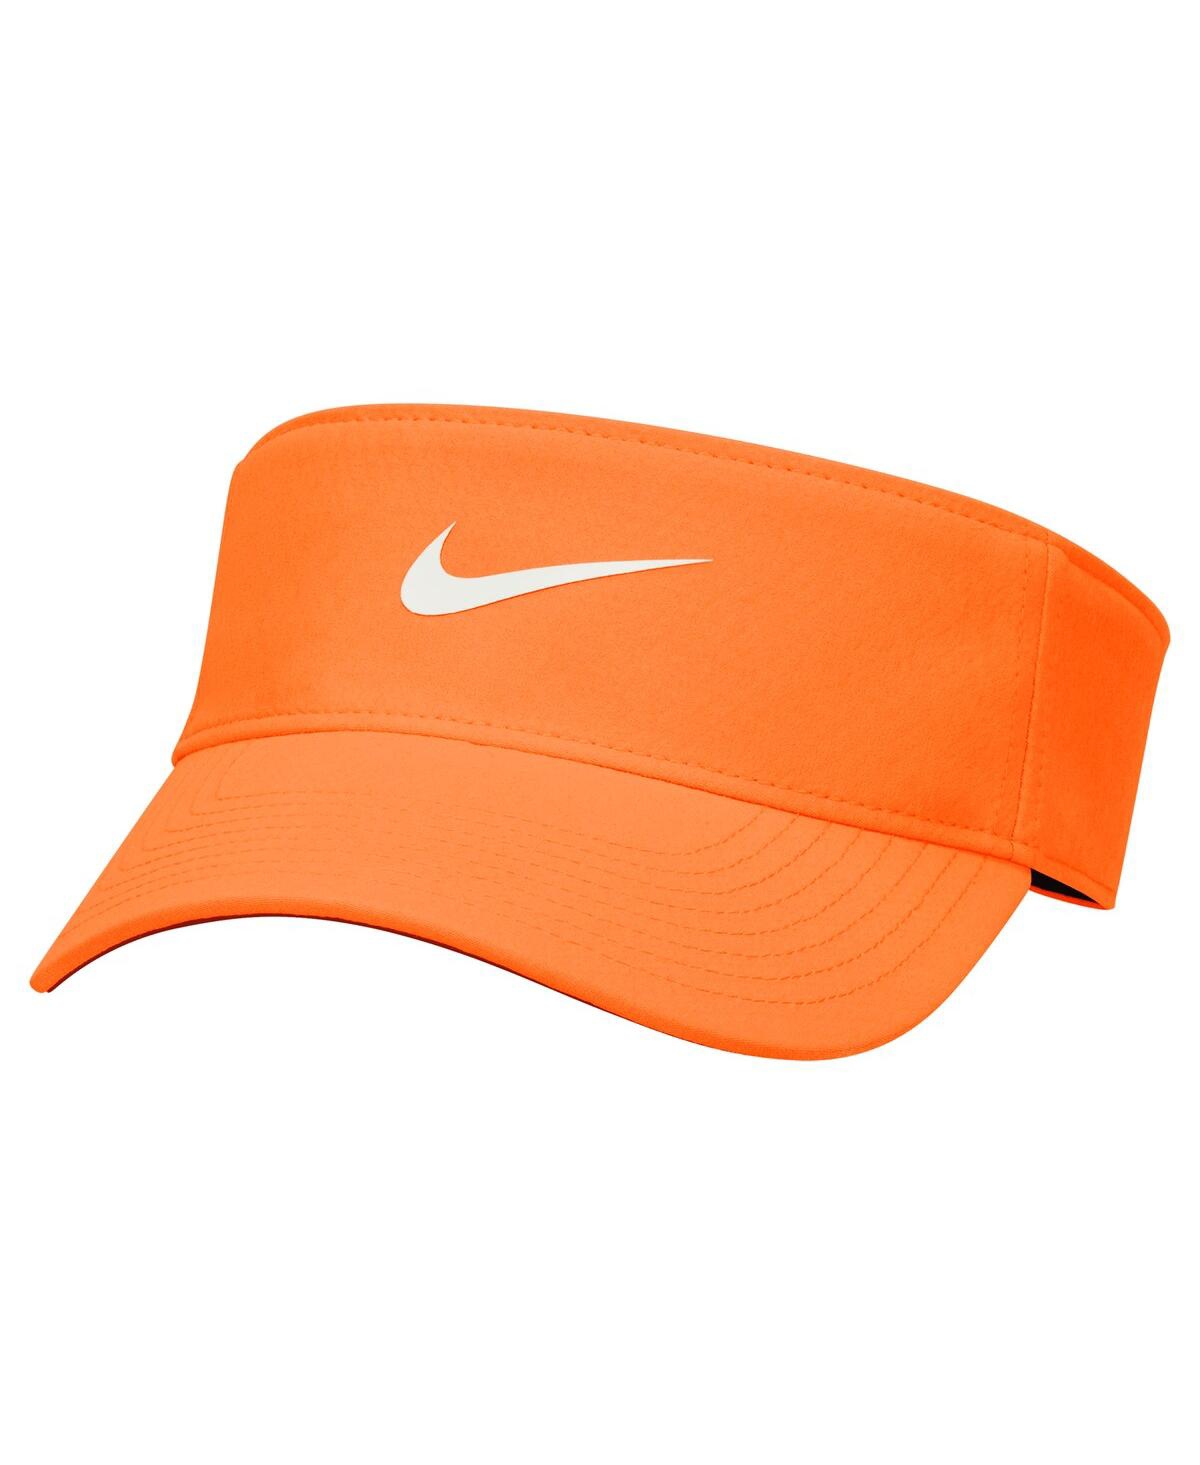 Men's and Women's Orange Ace Performance Adjustable Visor Hat - Orange